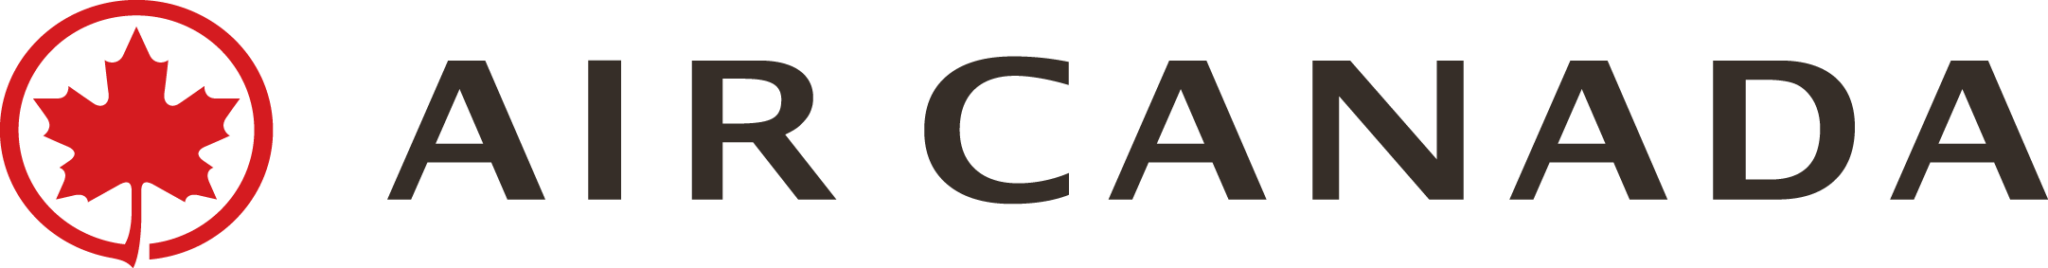 Air Canada_Logo_Horizontal_onWhite